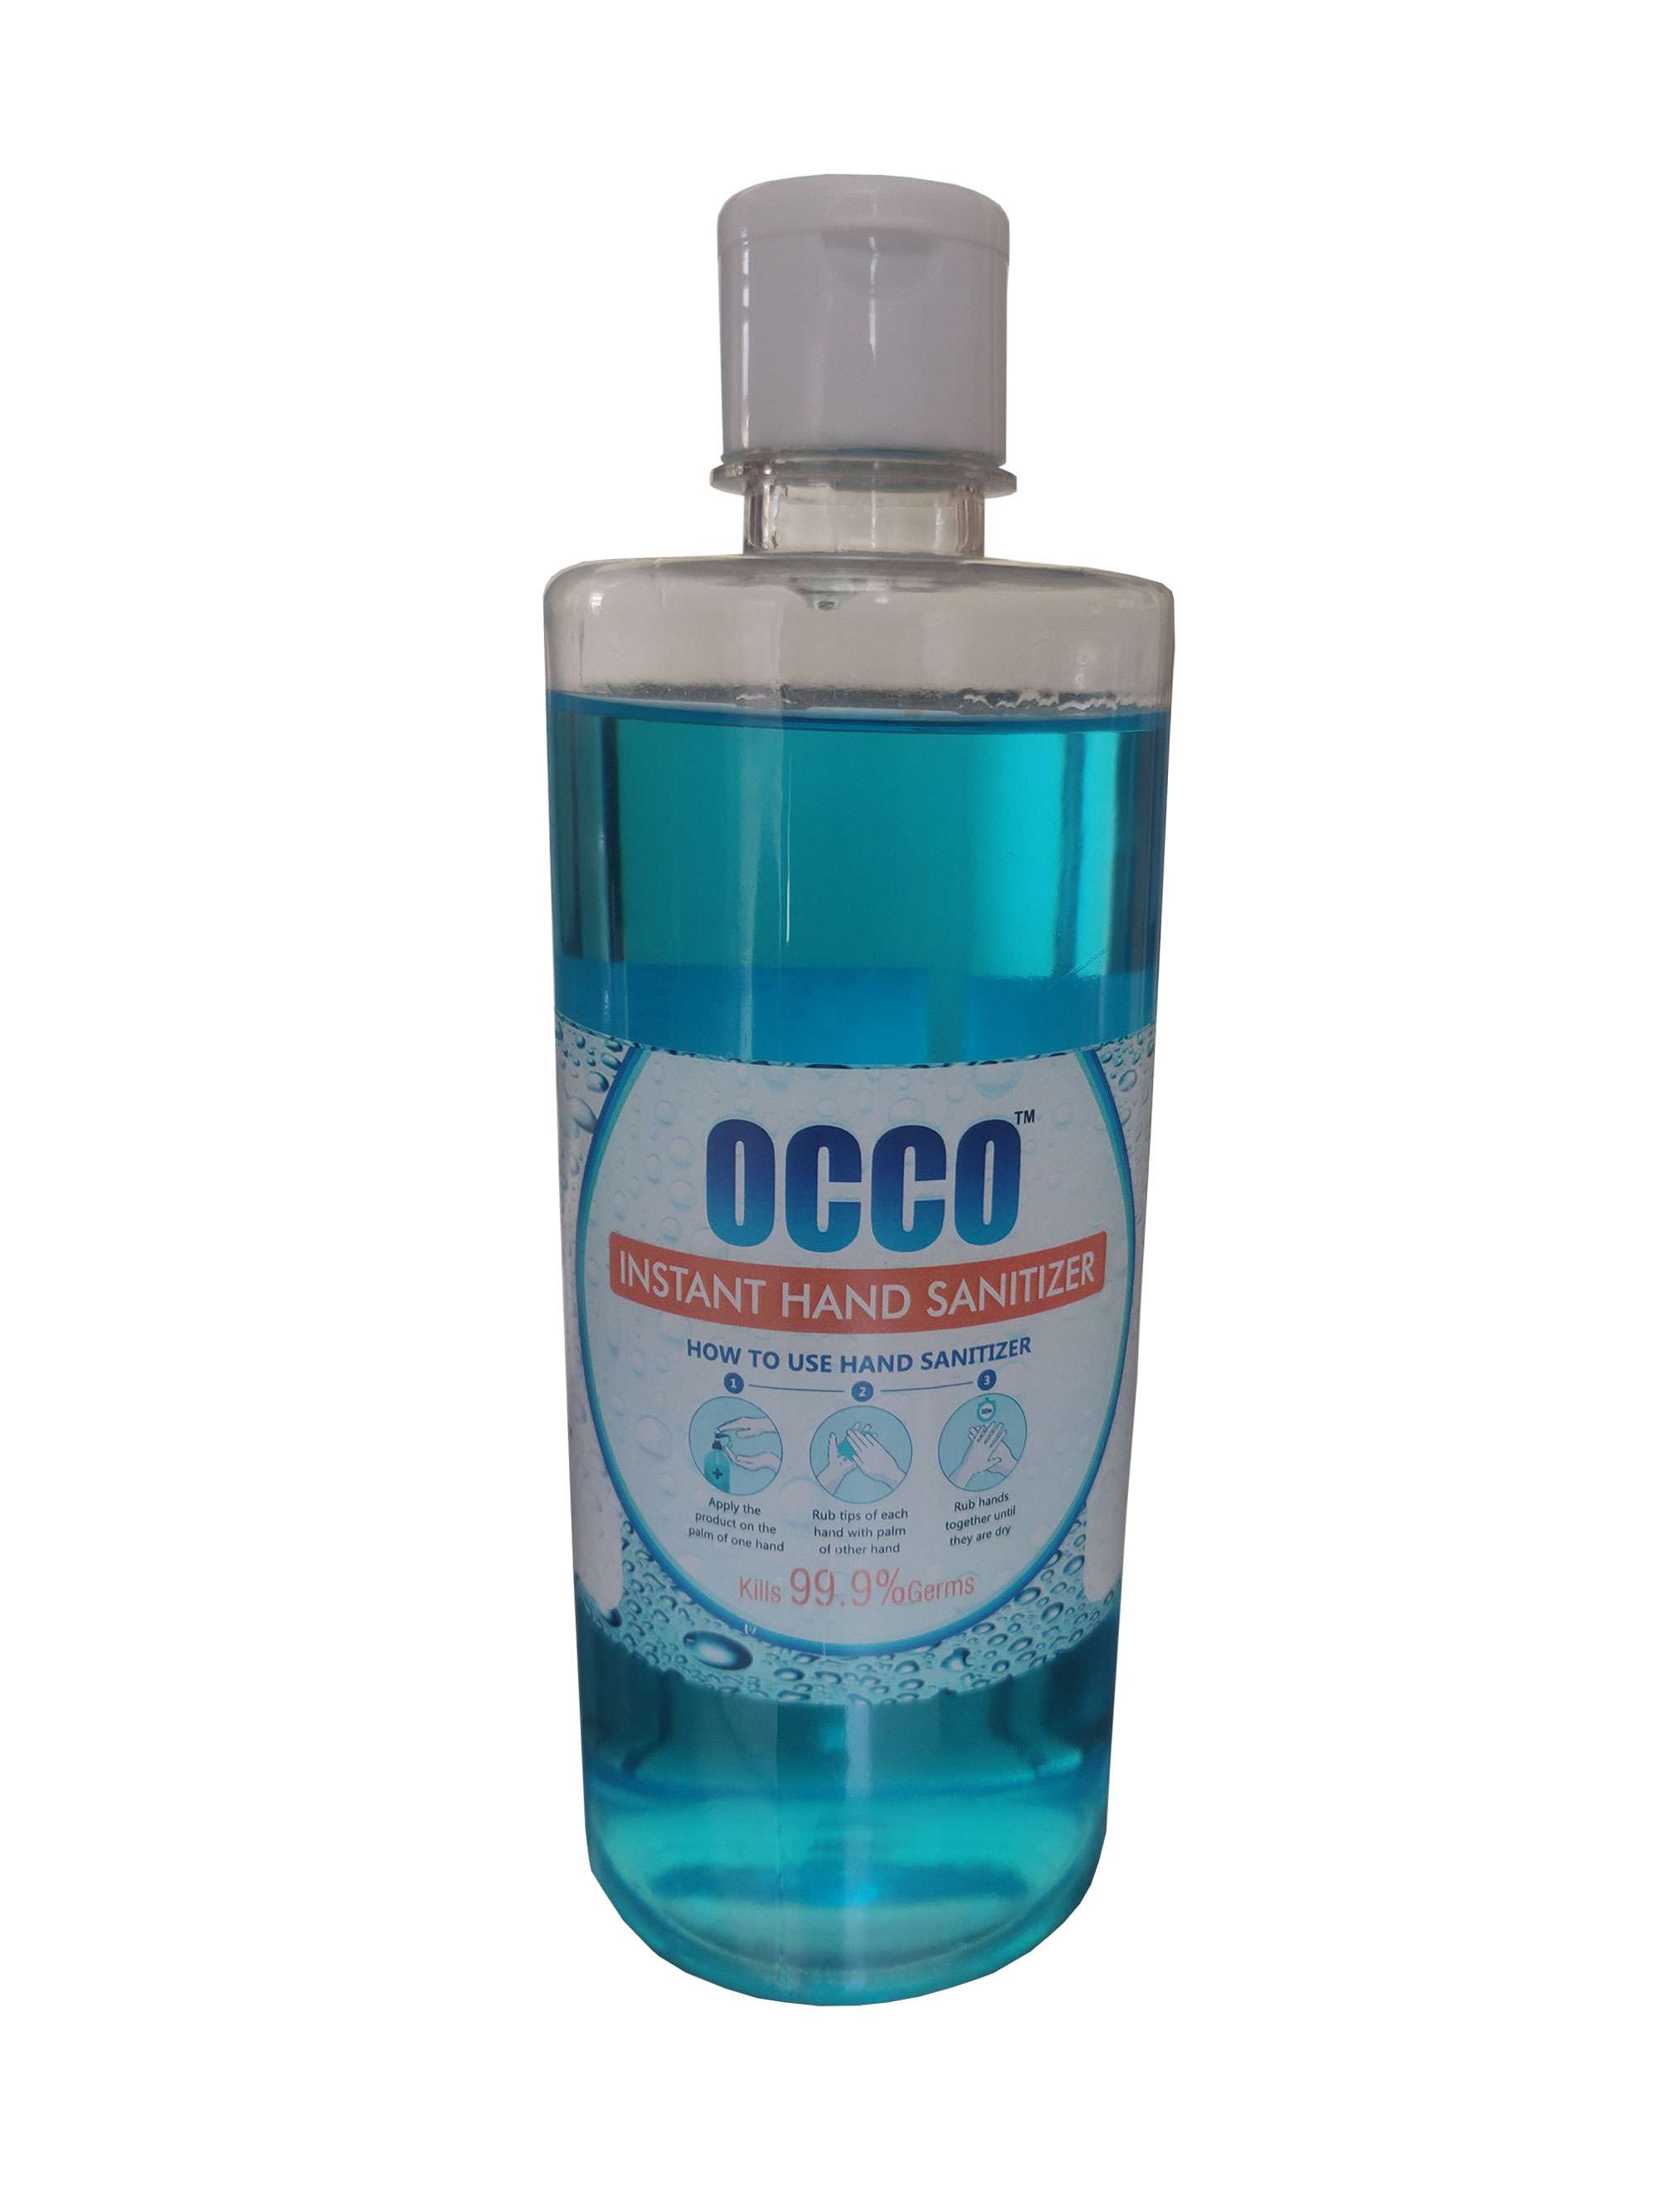 OCCO Instant Hand Sanitizer